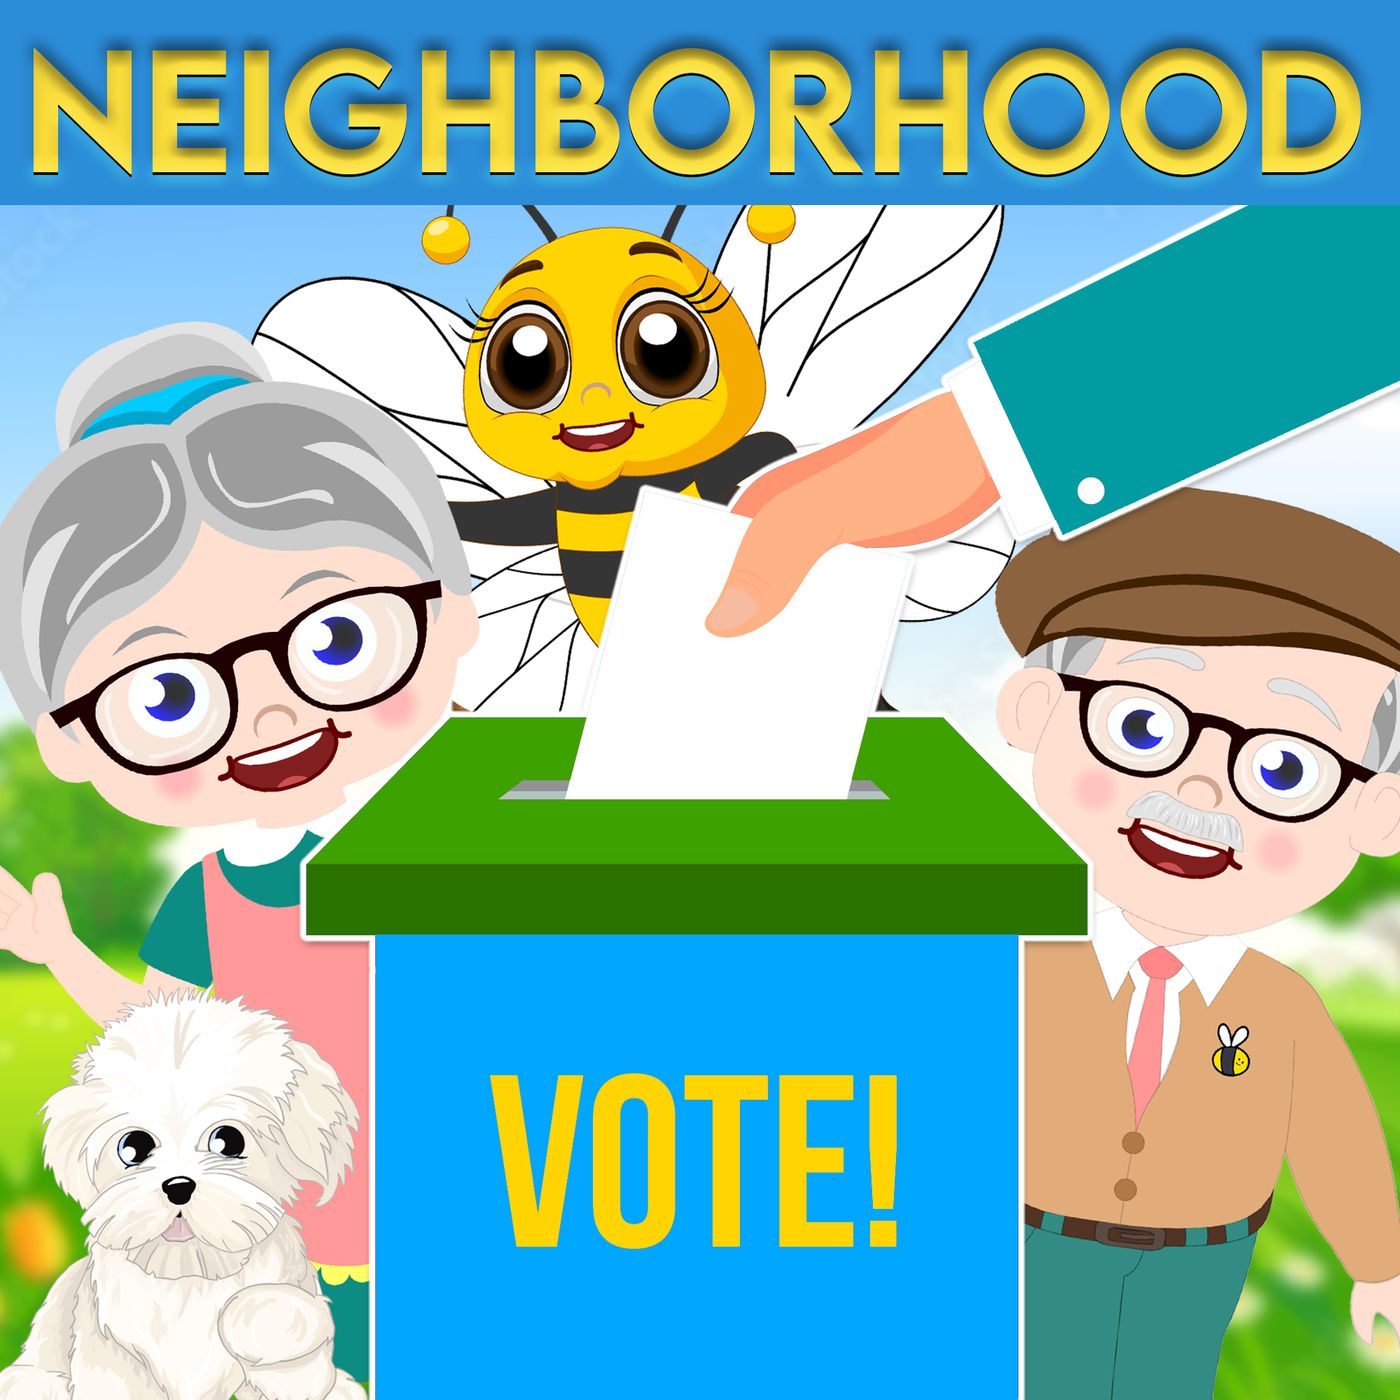 Mrs. Honeybee's Neighborhood - VOTE! (on the next story)